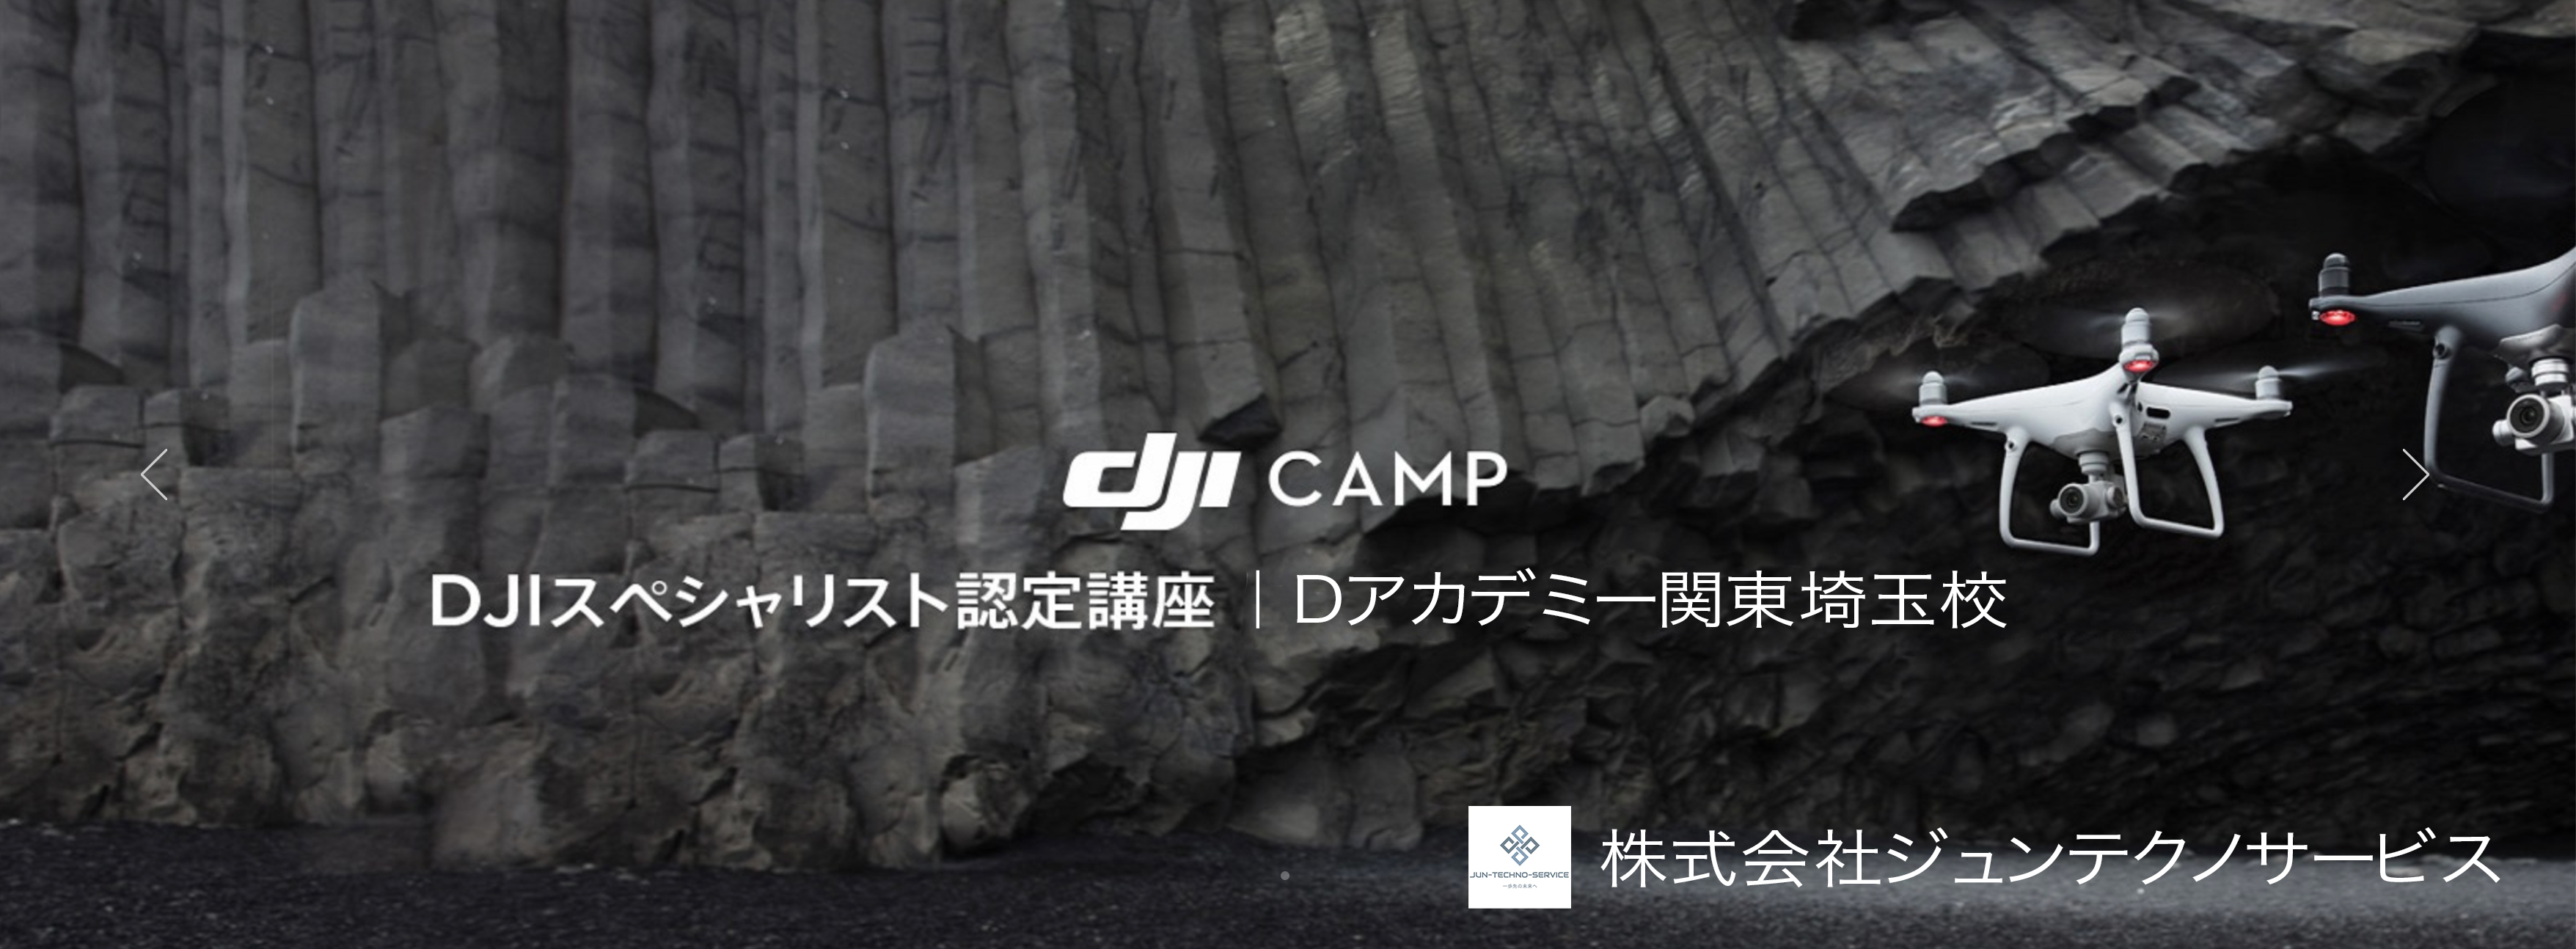 【D-ACADEMY関東埼玉】DJI CAMP 休日実施　7月14日〜7月15日 2日間